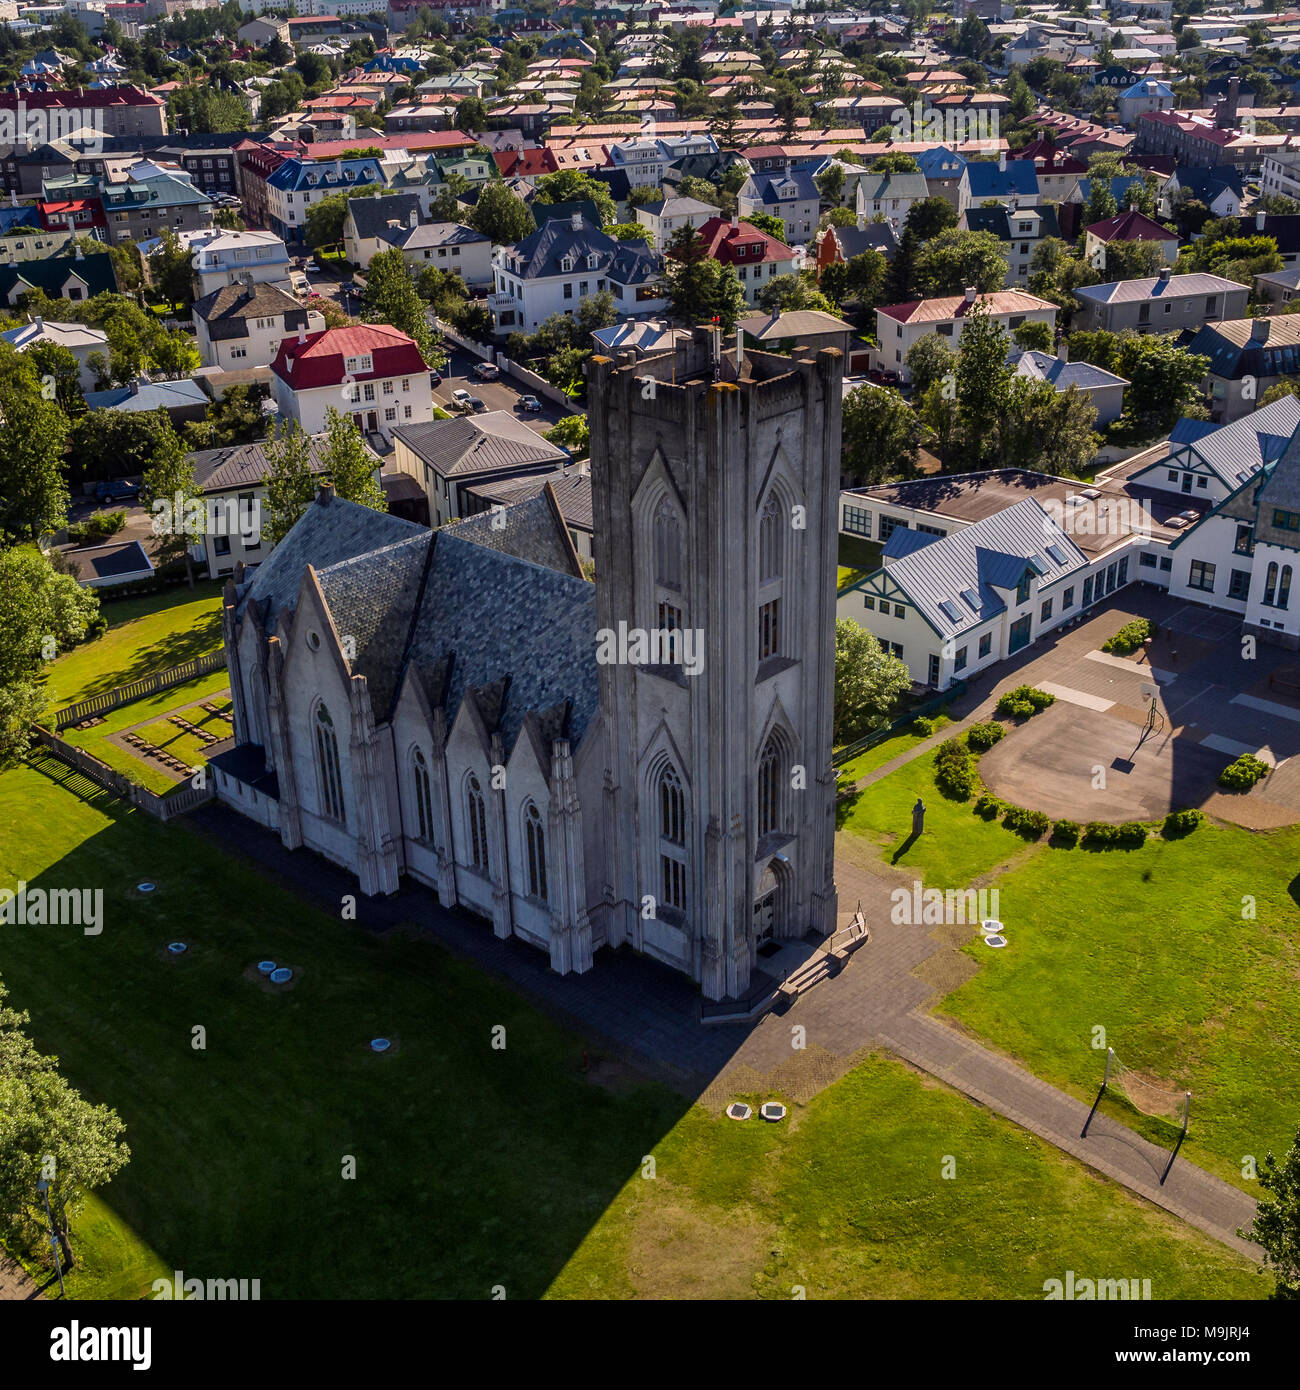 Church-Landakotskirkja catholique, Reykjavik, Islande. Drone abattu. Banque D'Images